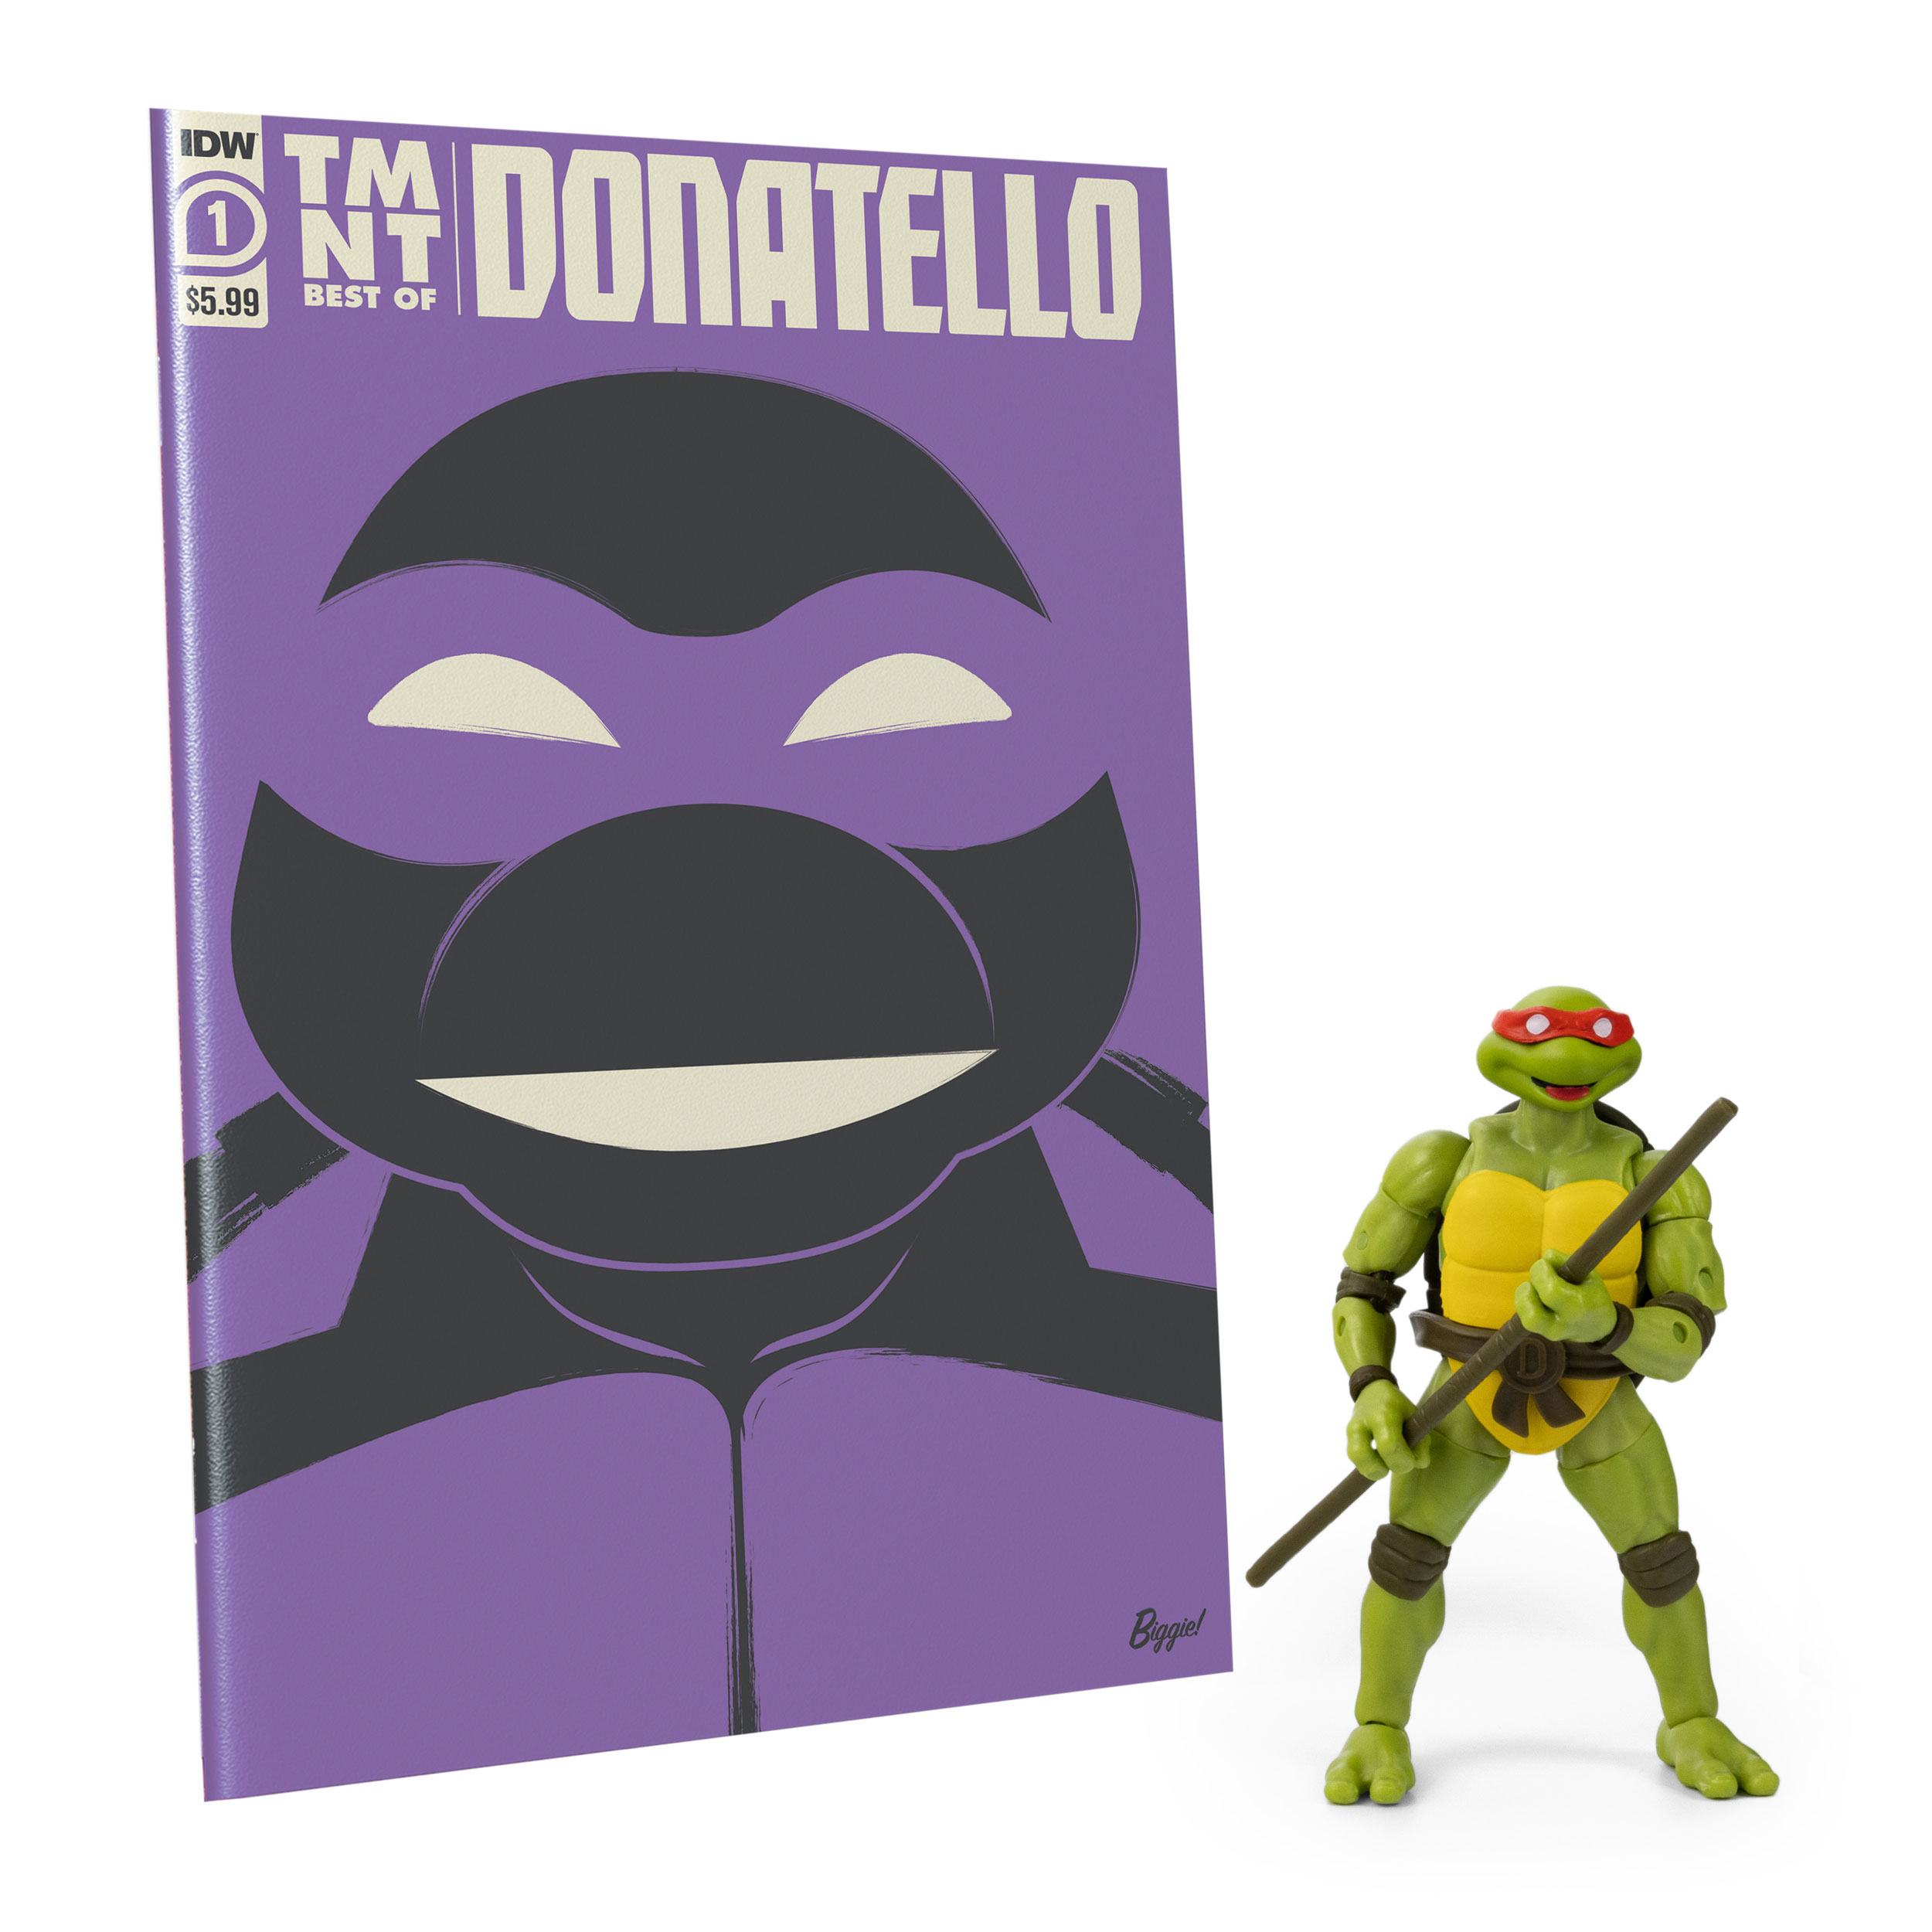 Teenage Mutant Ninja Turtles BST AXN x IDW Actionfigur & Comic Donatello Exclusive 13 cm TLSBATMNTDONCOM01WMS1DAP 16863033